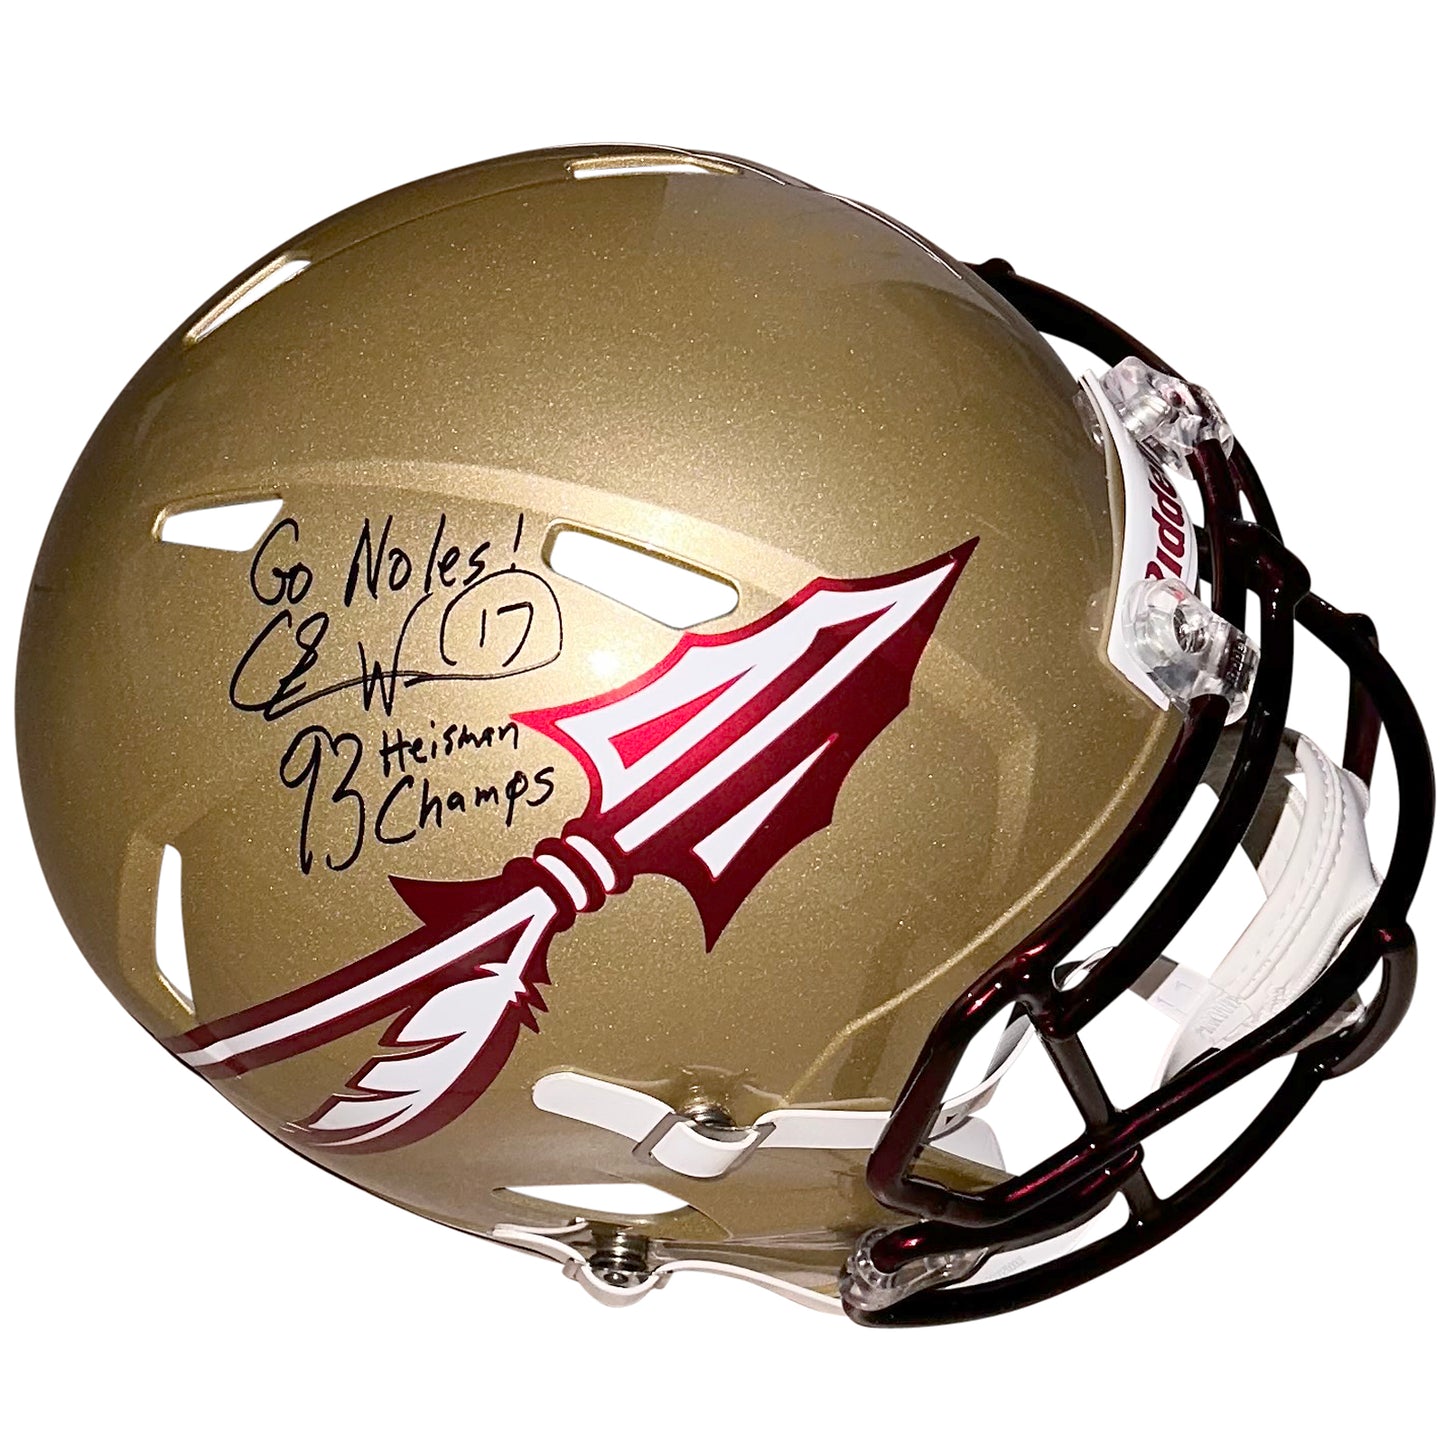 Charlie Ward Autographed Florida State FSU Seminoles Deluxe Full-Size Replica Helmet w/ 93 Heisman Champs